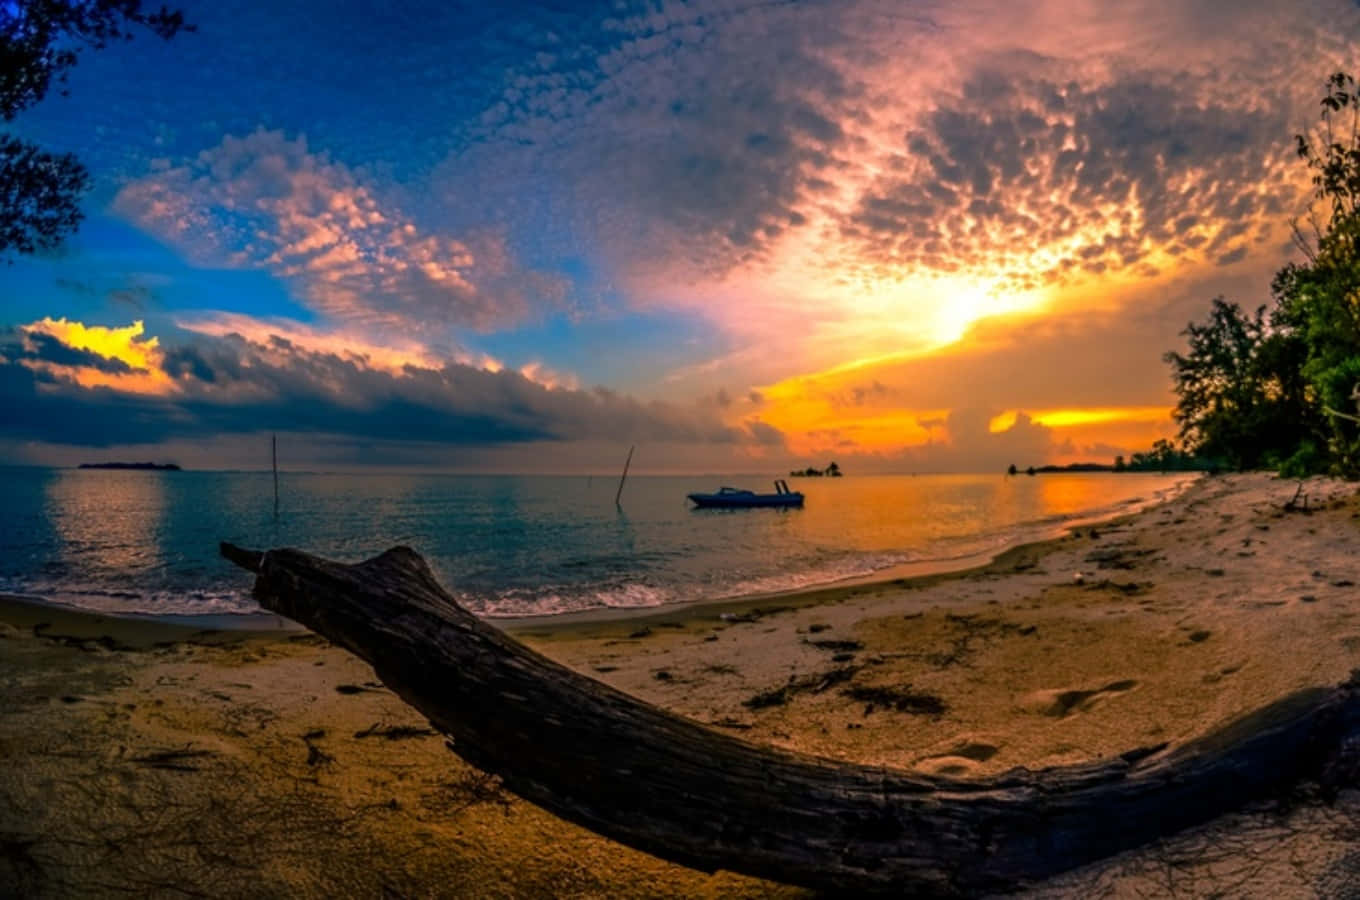 Pantai Beach Sunset Picture